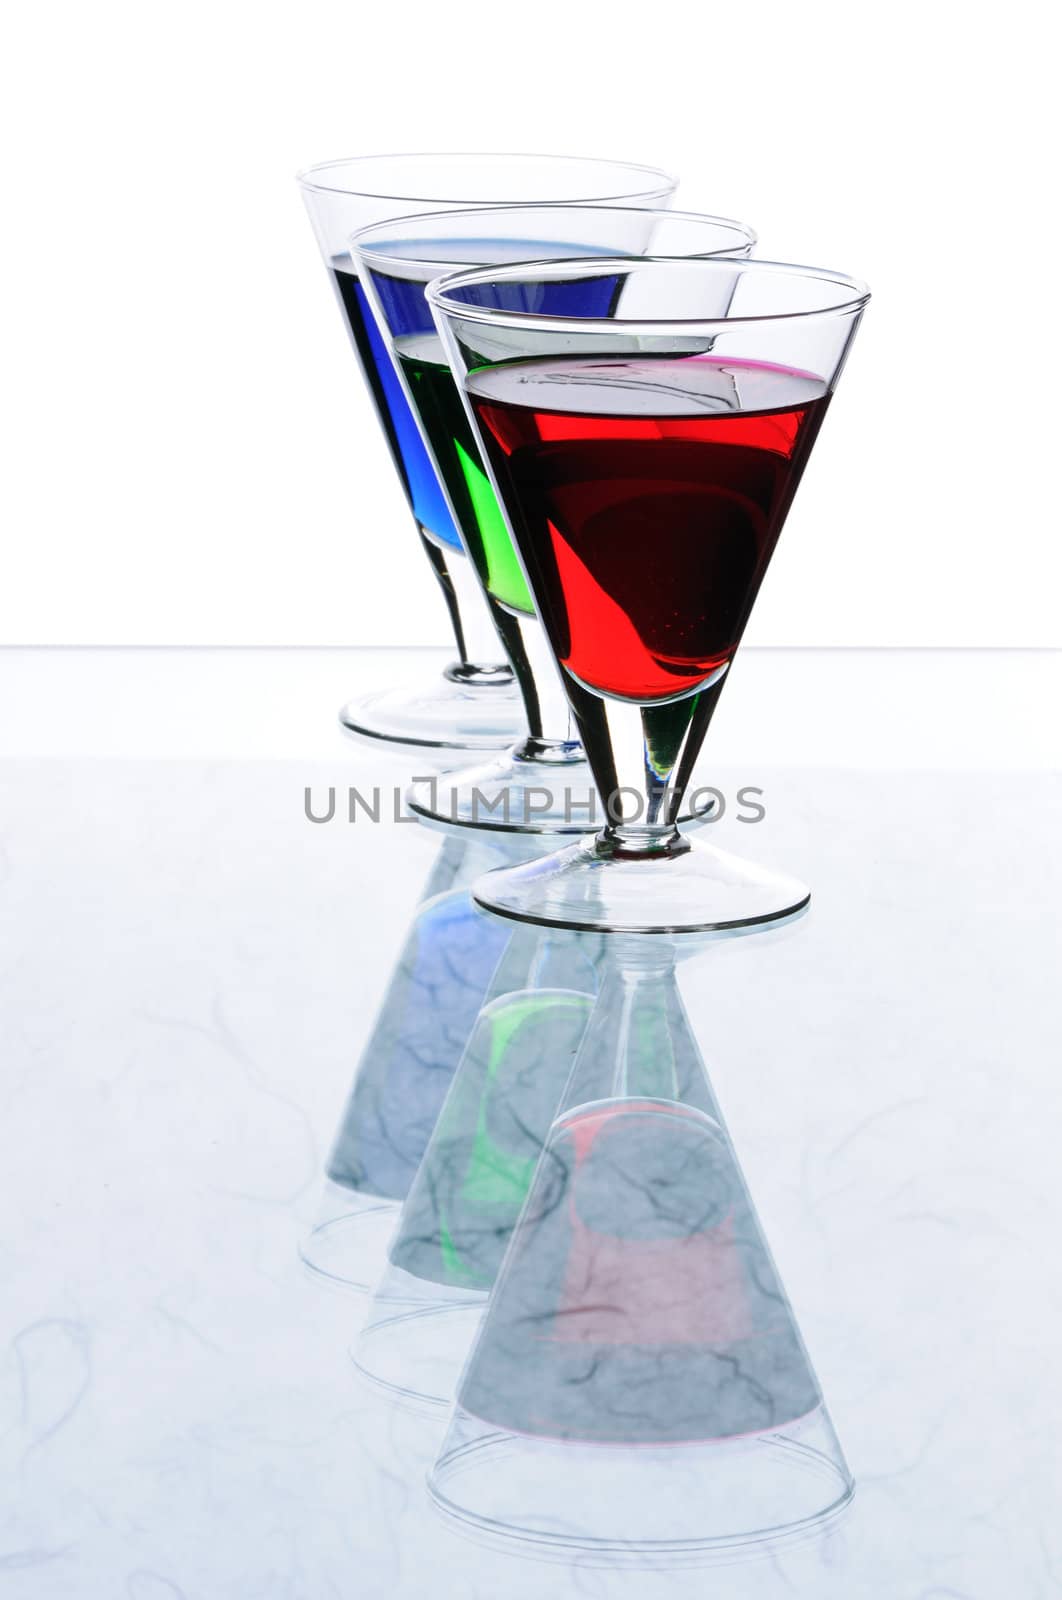 Wineglasses by uriy2007